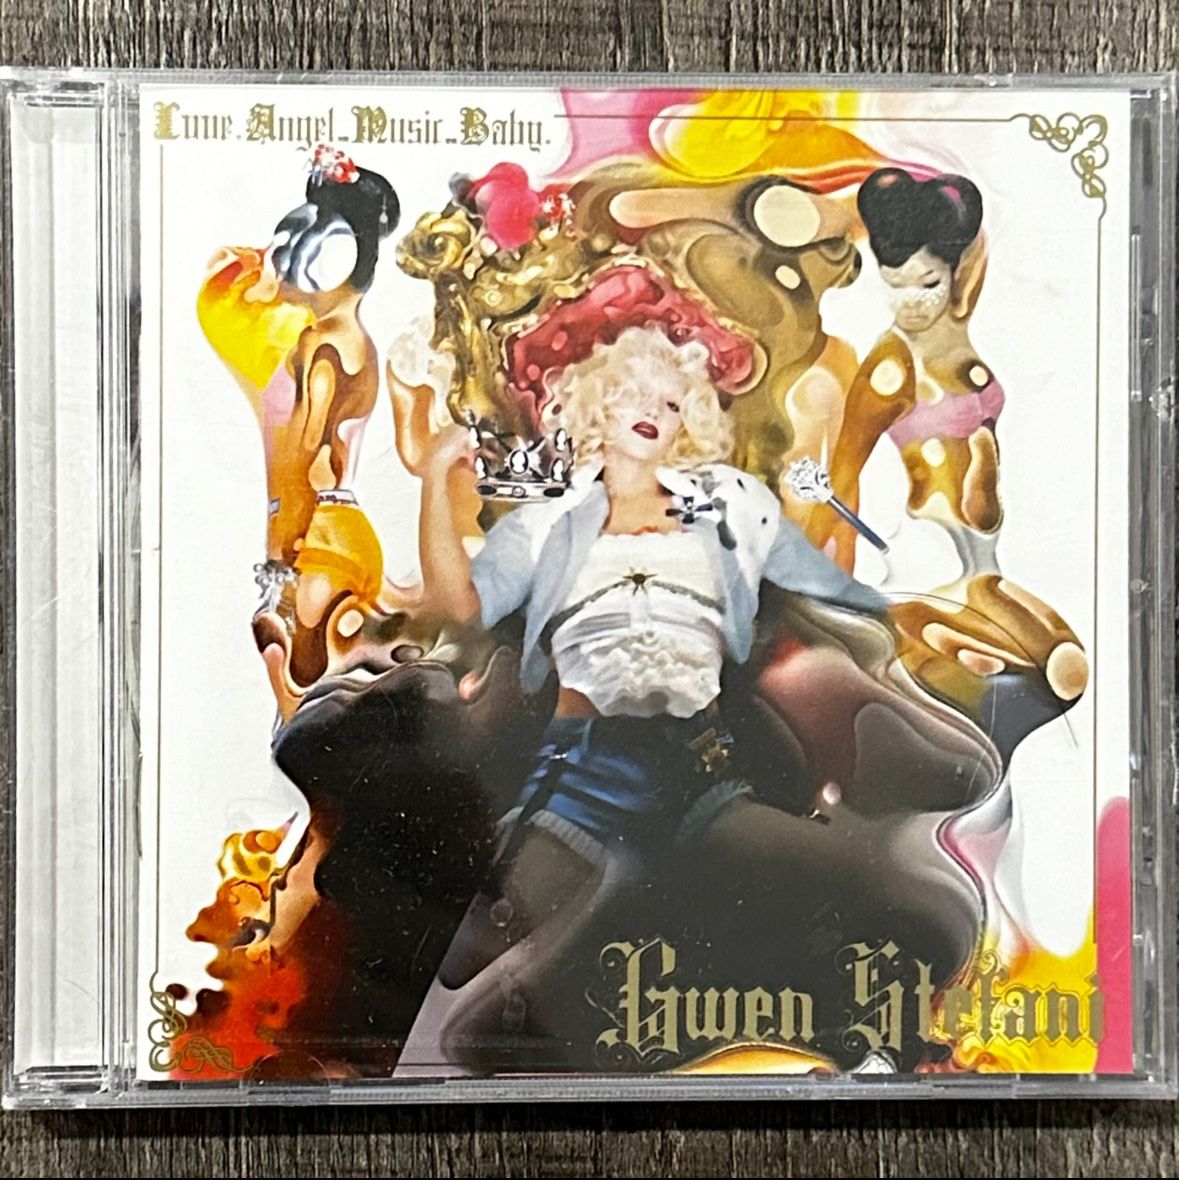 New Gwen Stefani Love Angel Music Baby CD